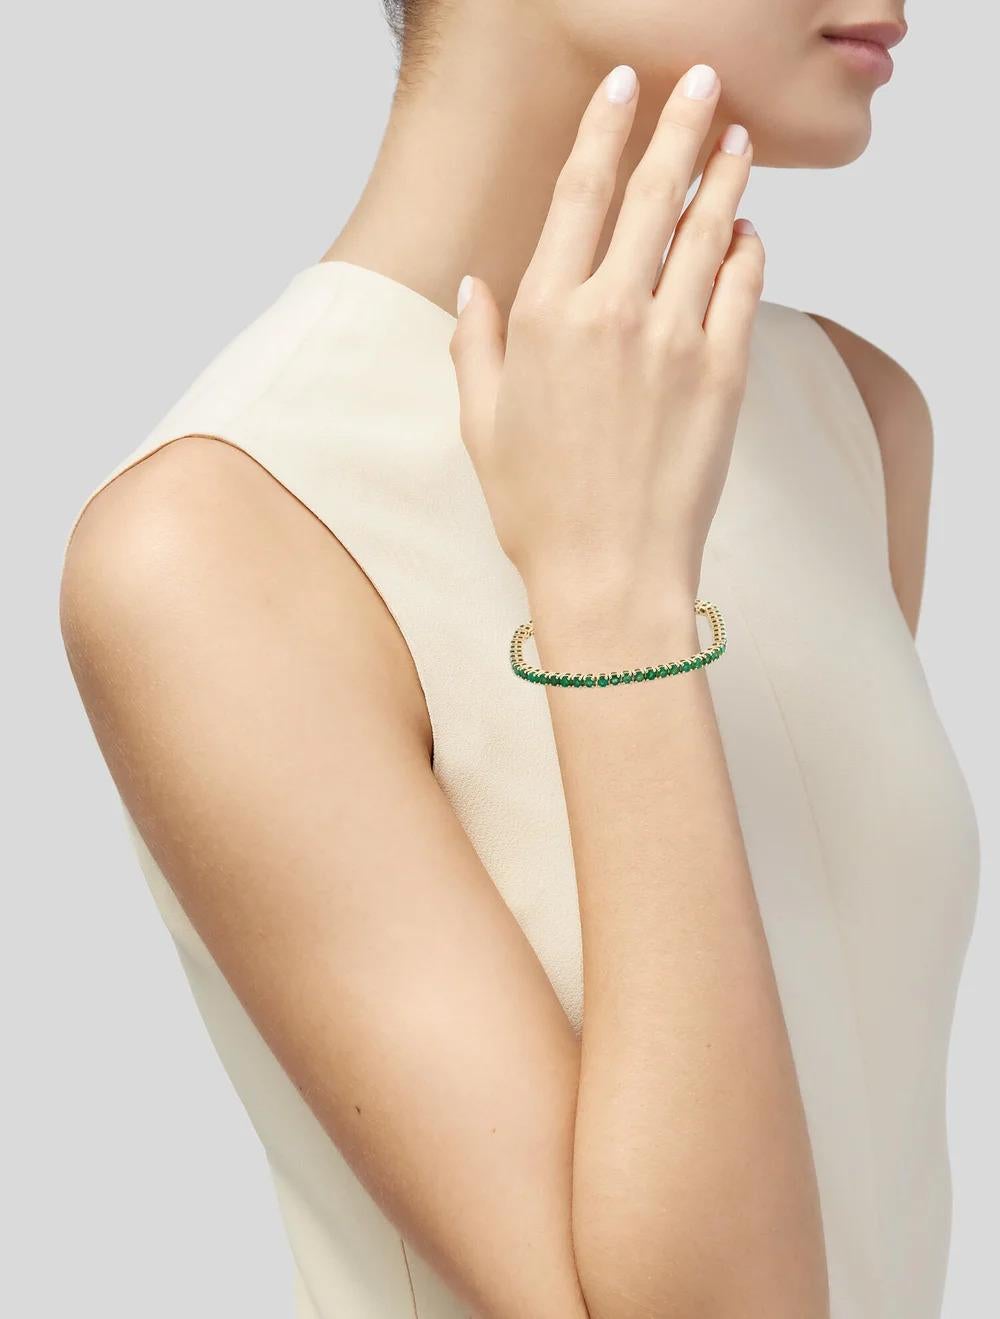 Round Cut Vintage 14K Emerald Link Bracelet - 5.10ctw, Green Gemstone, Period Jewelry For Sale